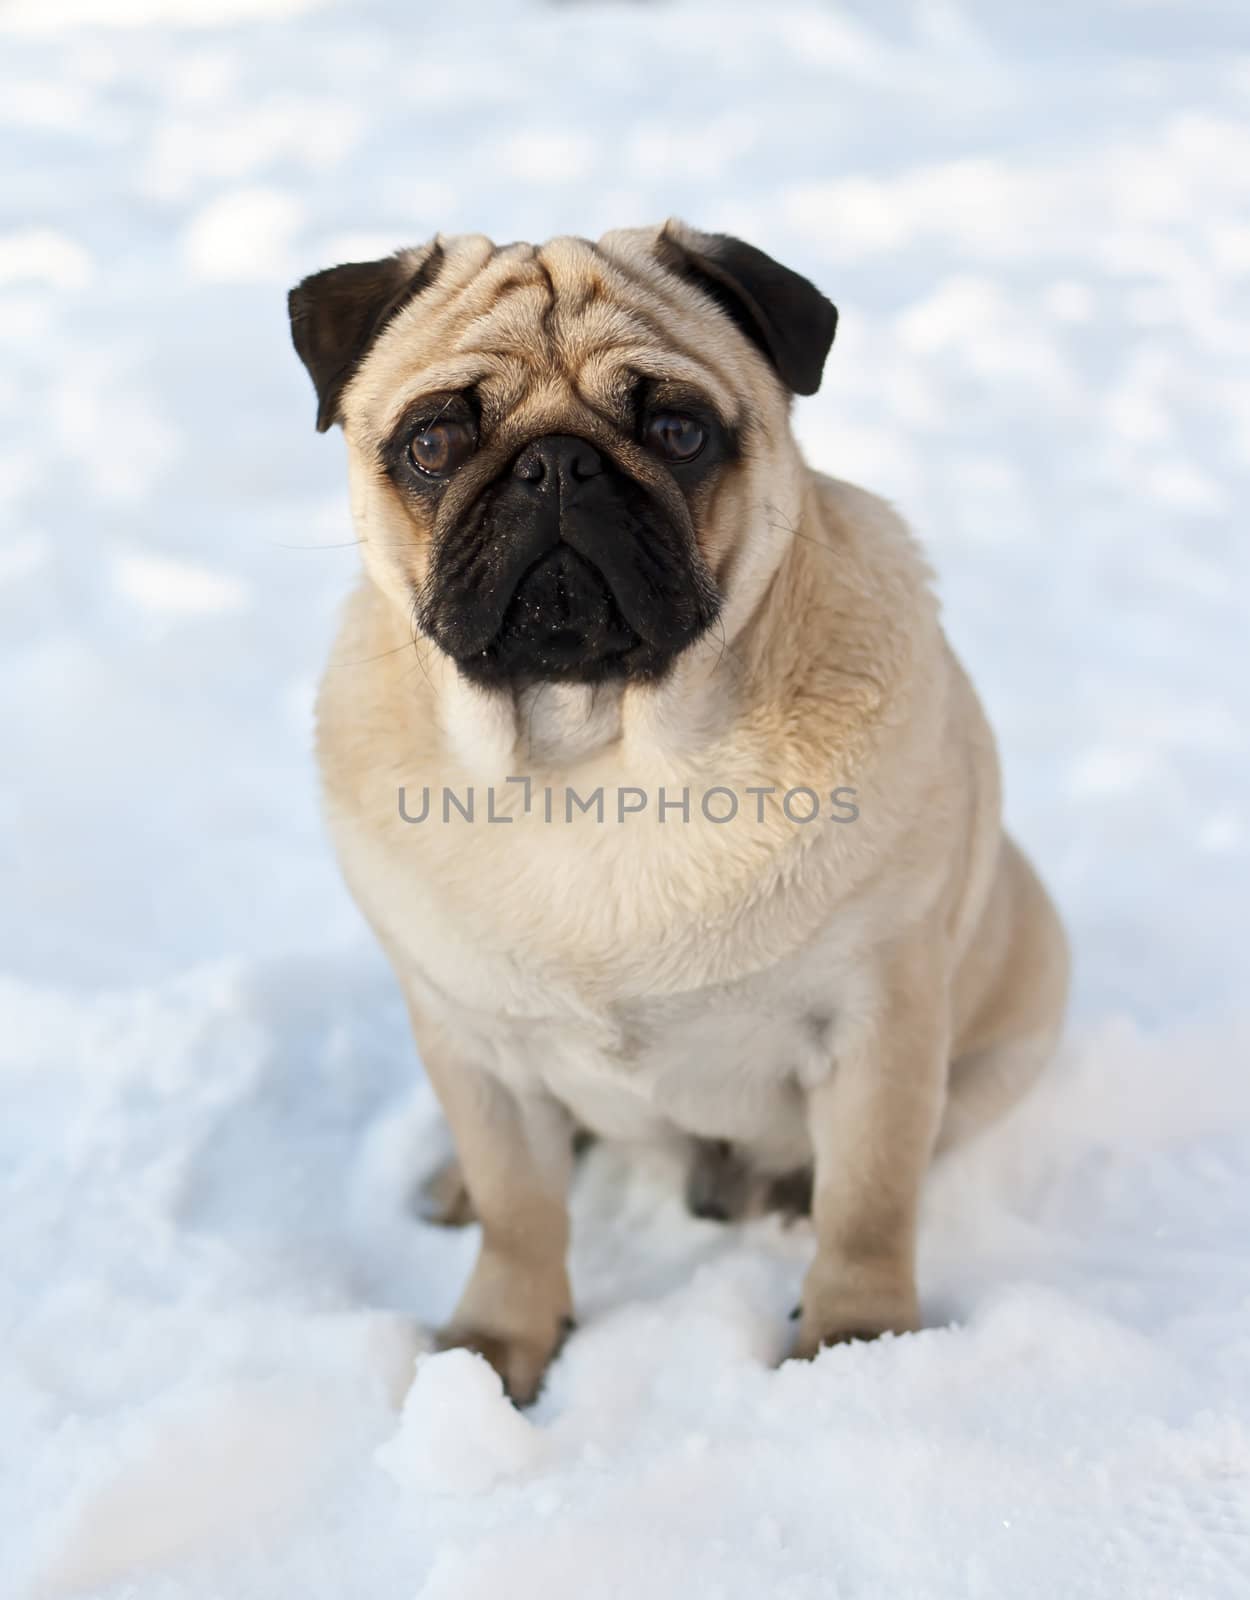 Pug sitting in snow by dmitrimaruta